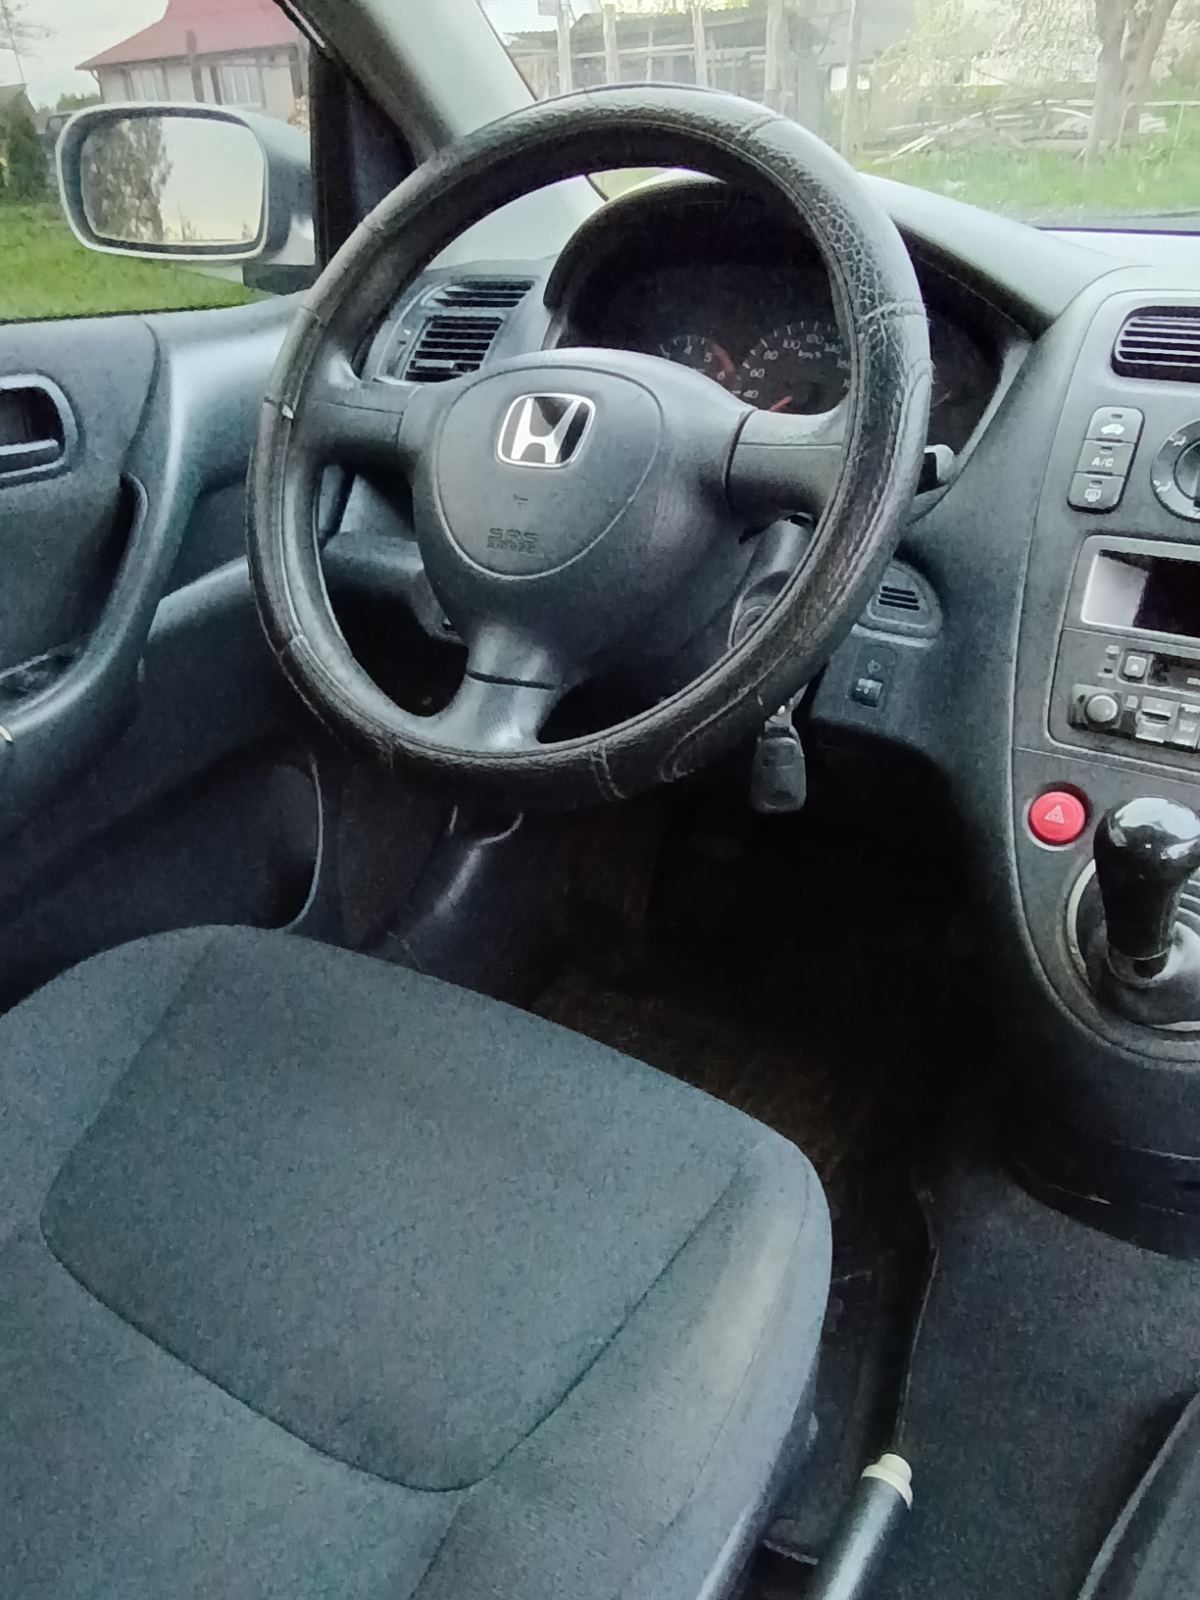 Honda Civic динамічне економне авто